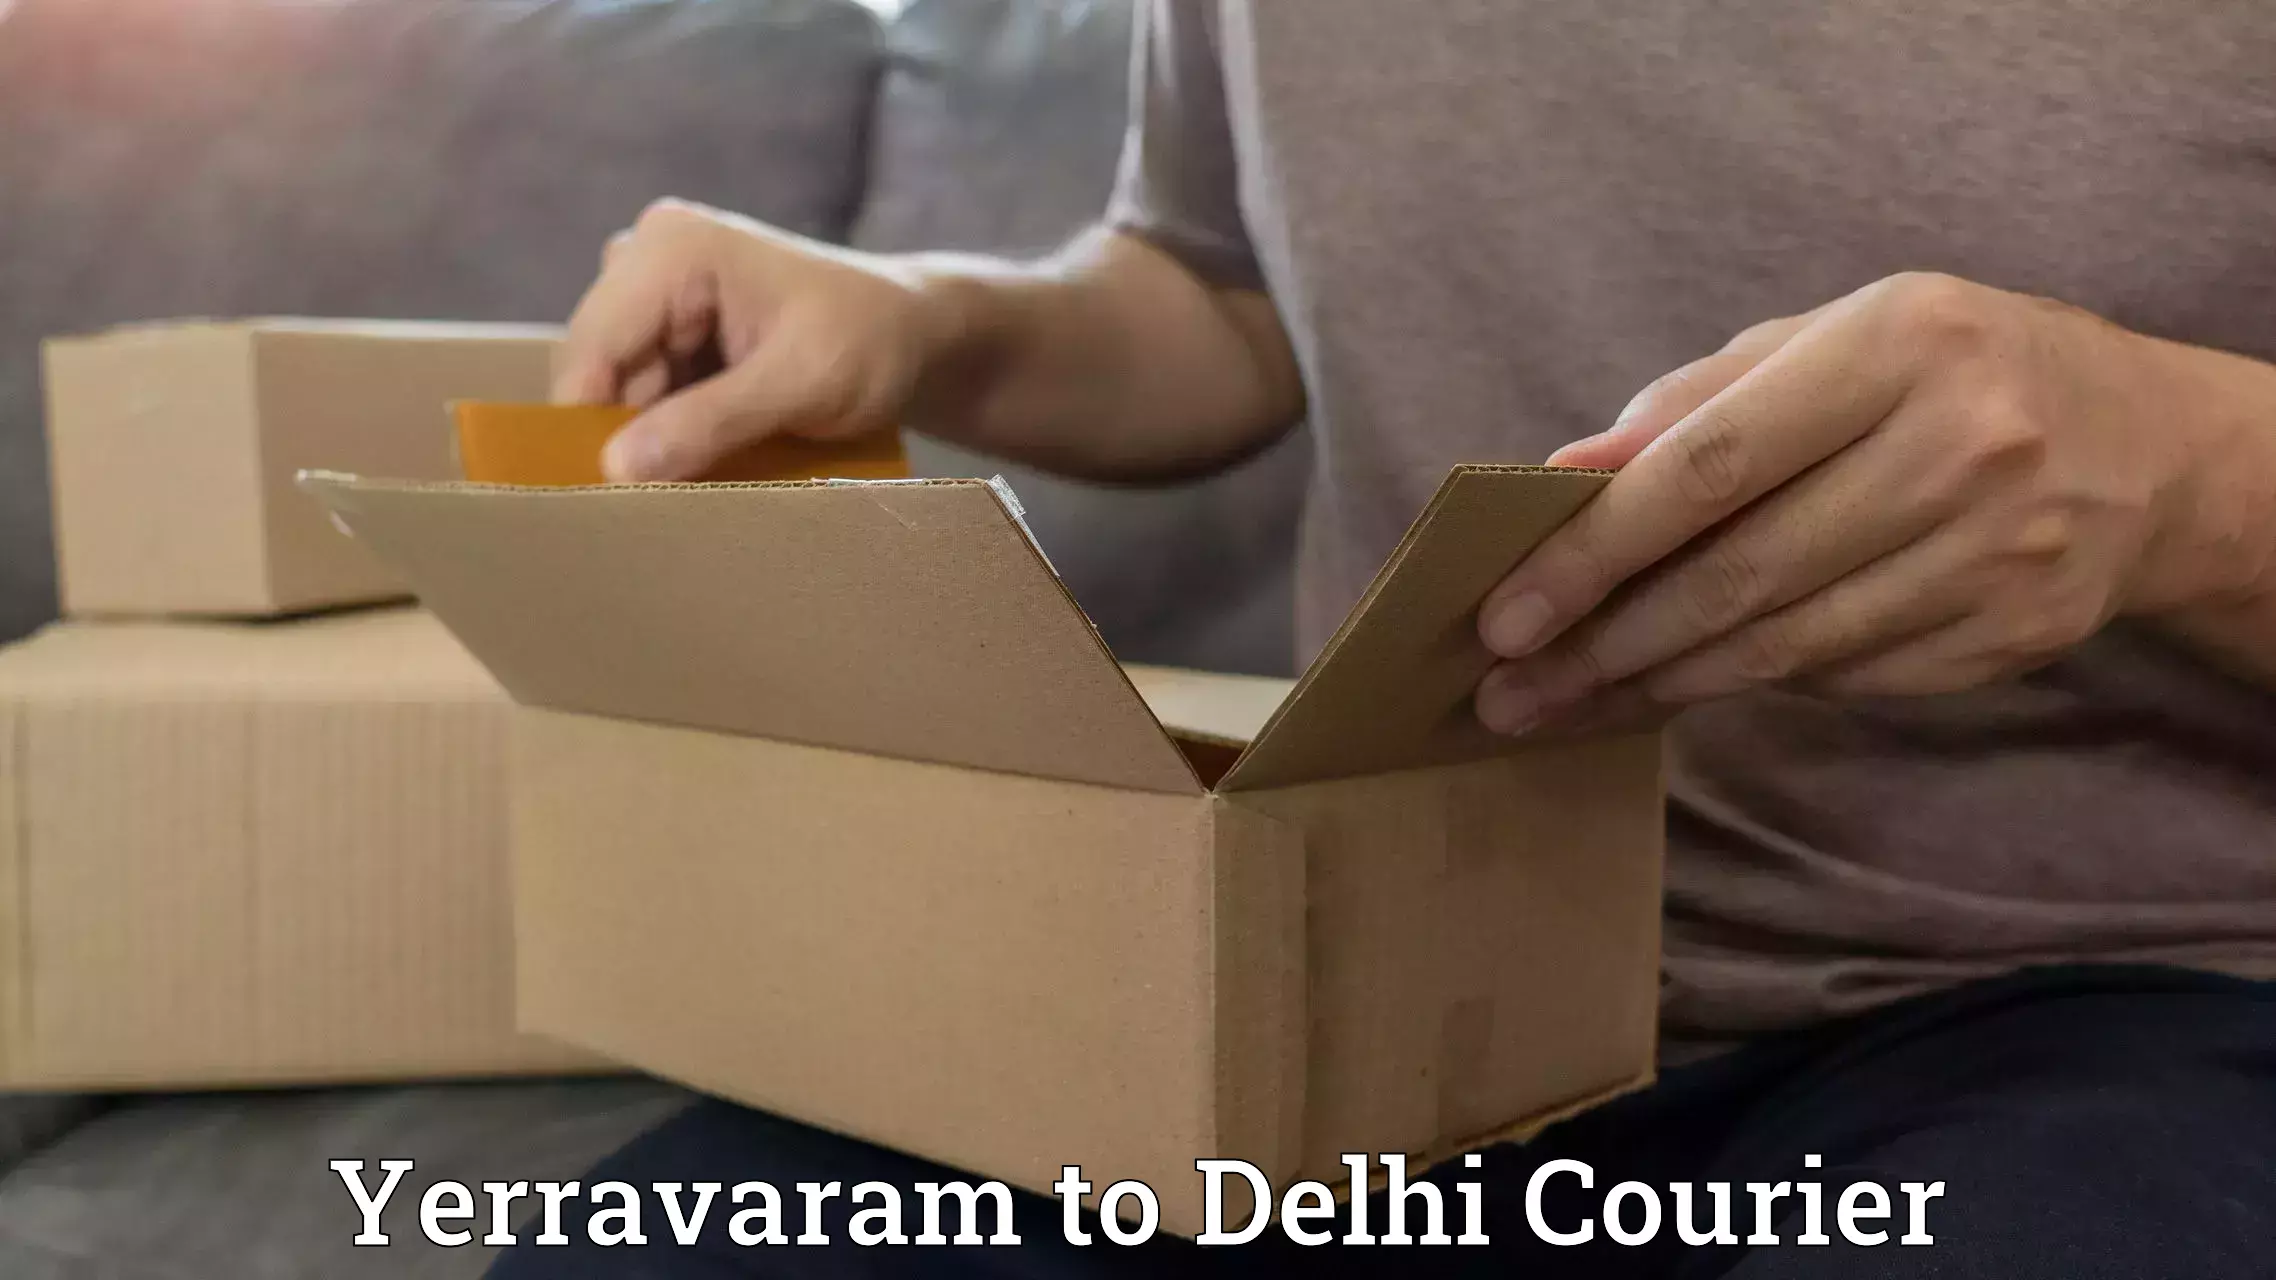 Efficient parcel service Yerravaram to University of Delhi